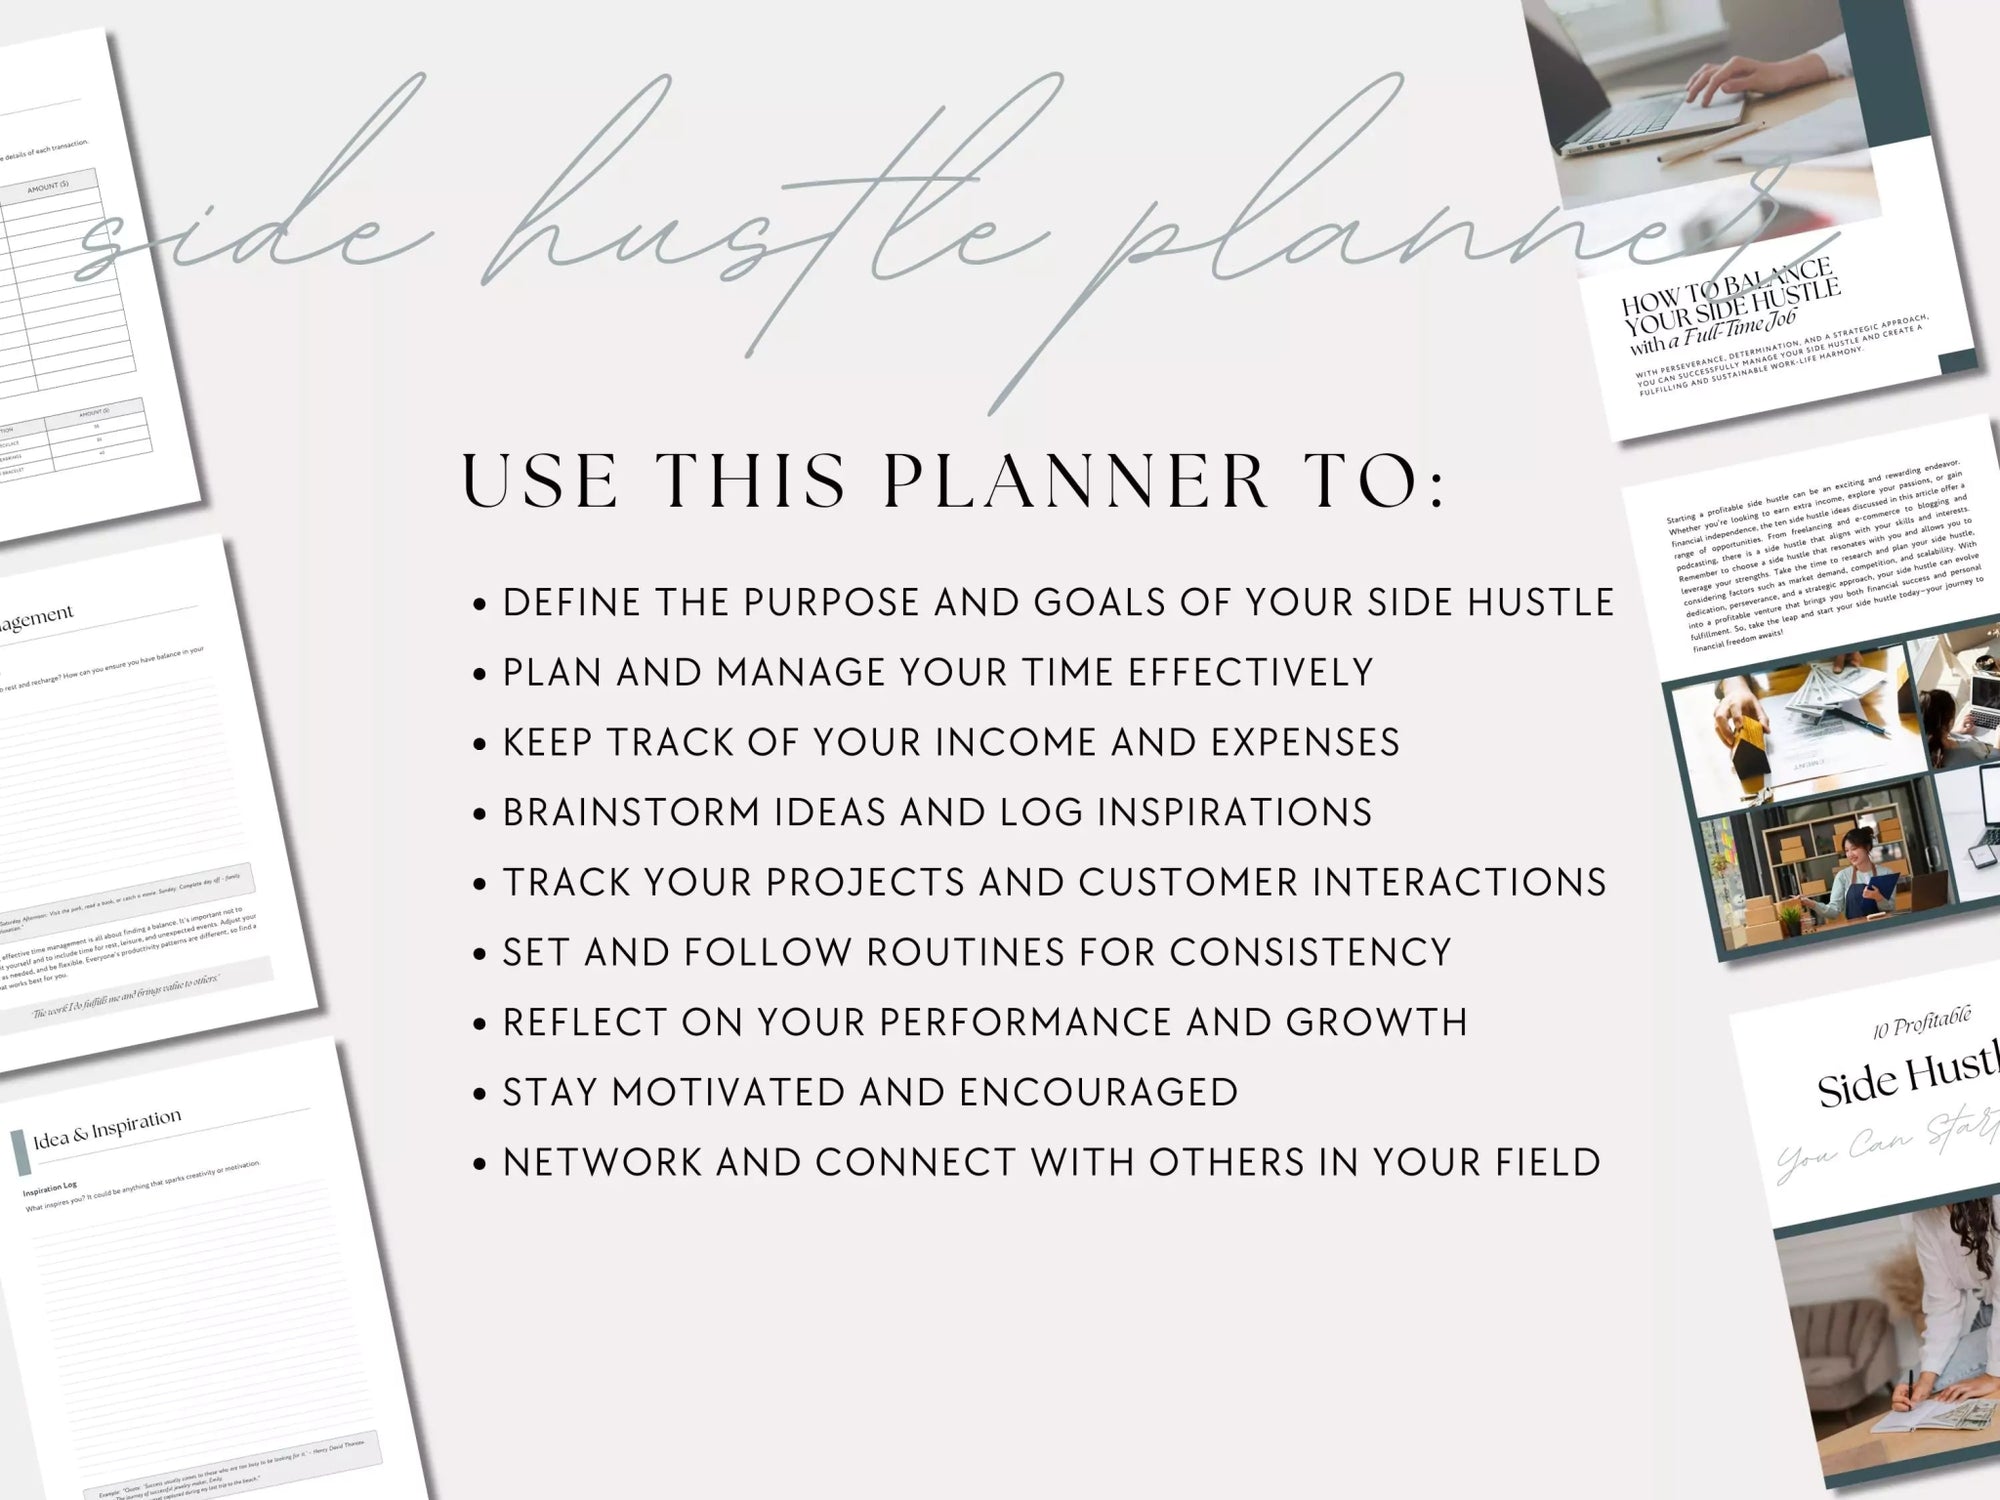 Side Hustle Workbook & Planner - Printable Business Planner, Passive Income Workbook - Trendy Fox Studio